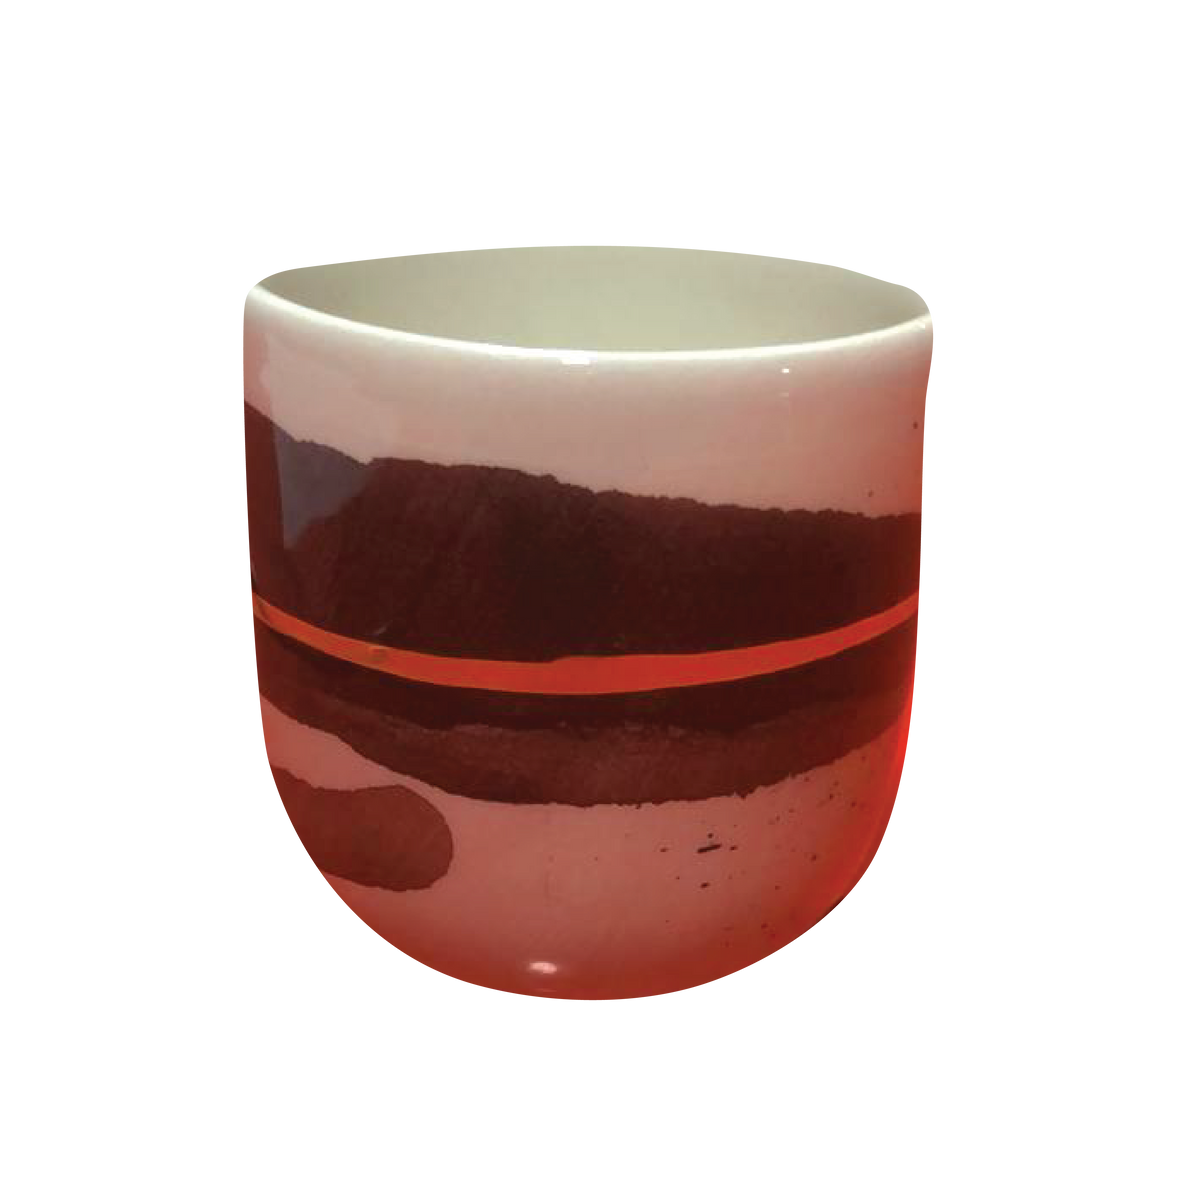 Marinski Espresso Cup - 50ml